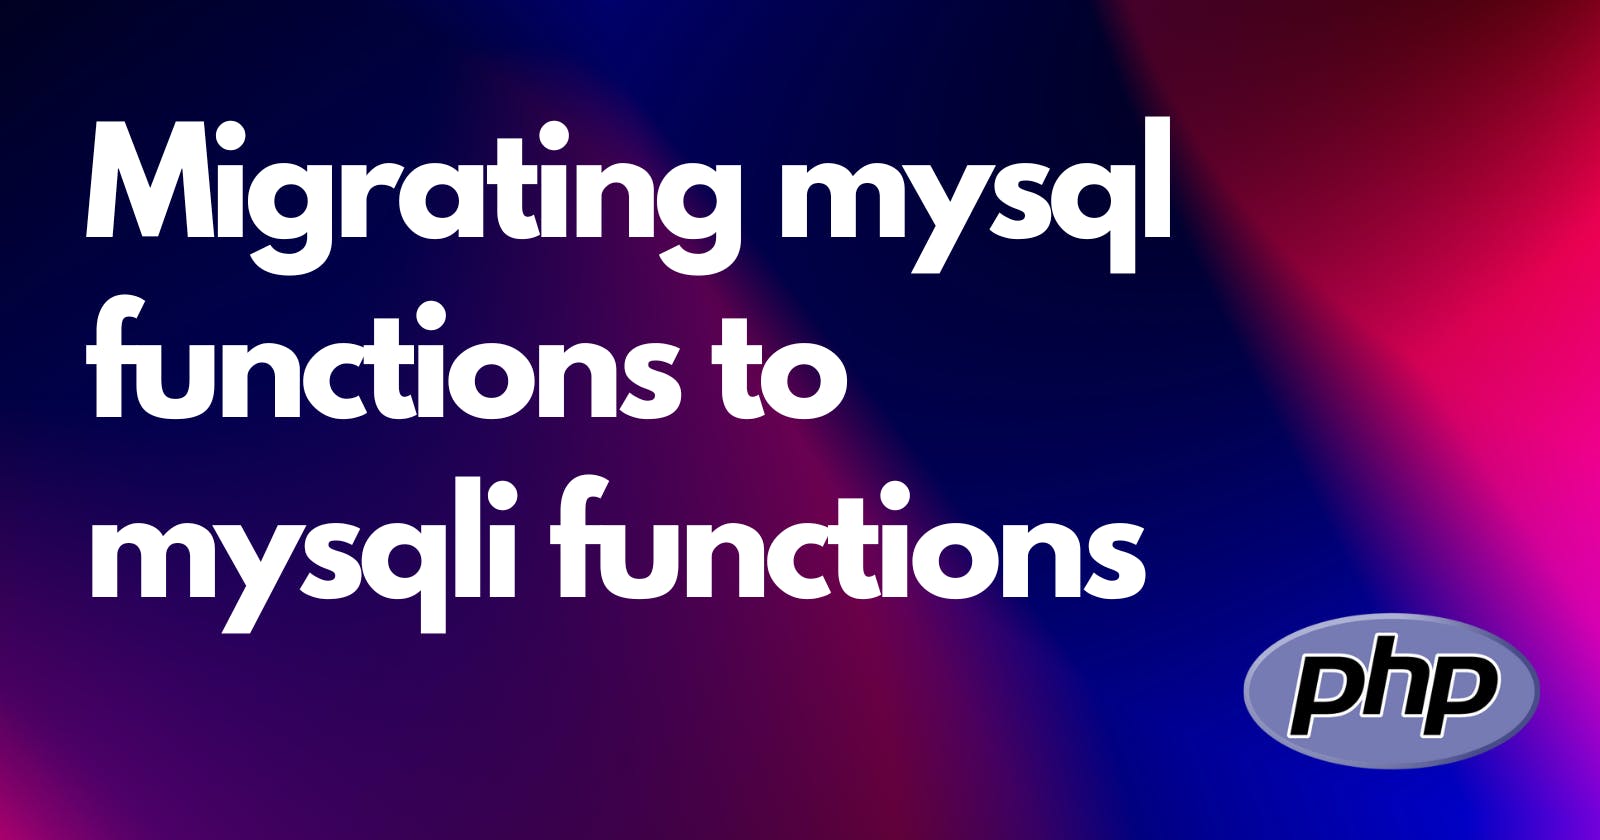 Migrating mysql functions to mysqli functions in PHP